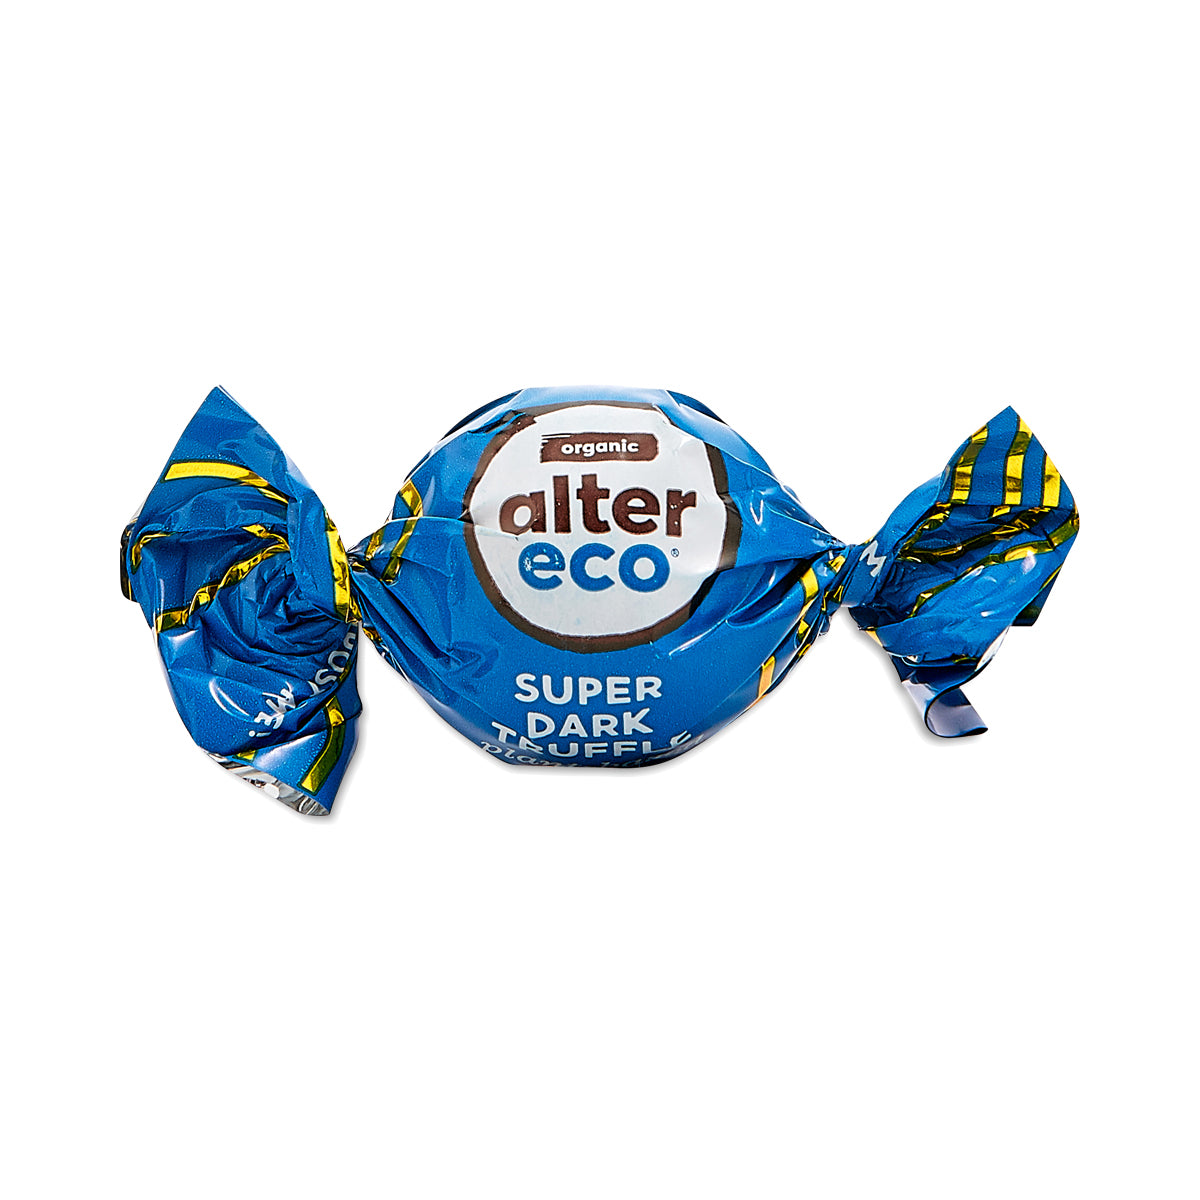 Alter Eco, Superdark Chocolate Truffle, single